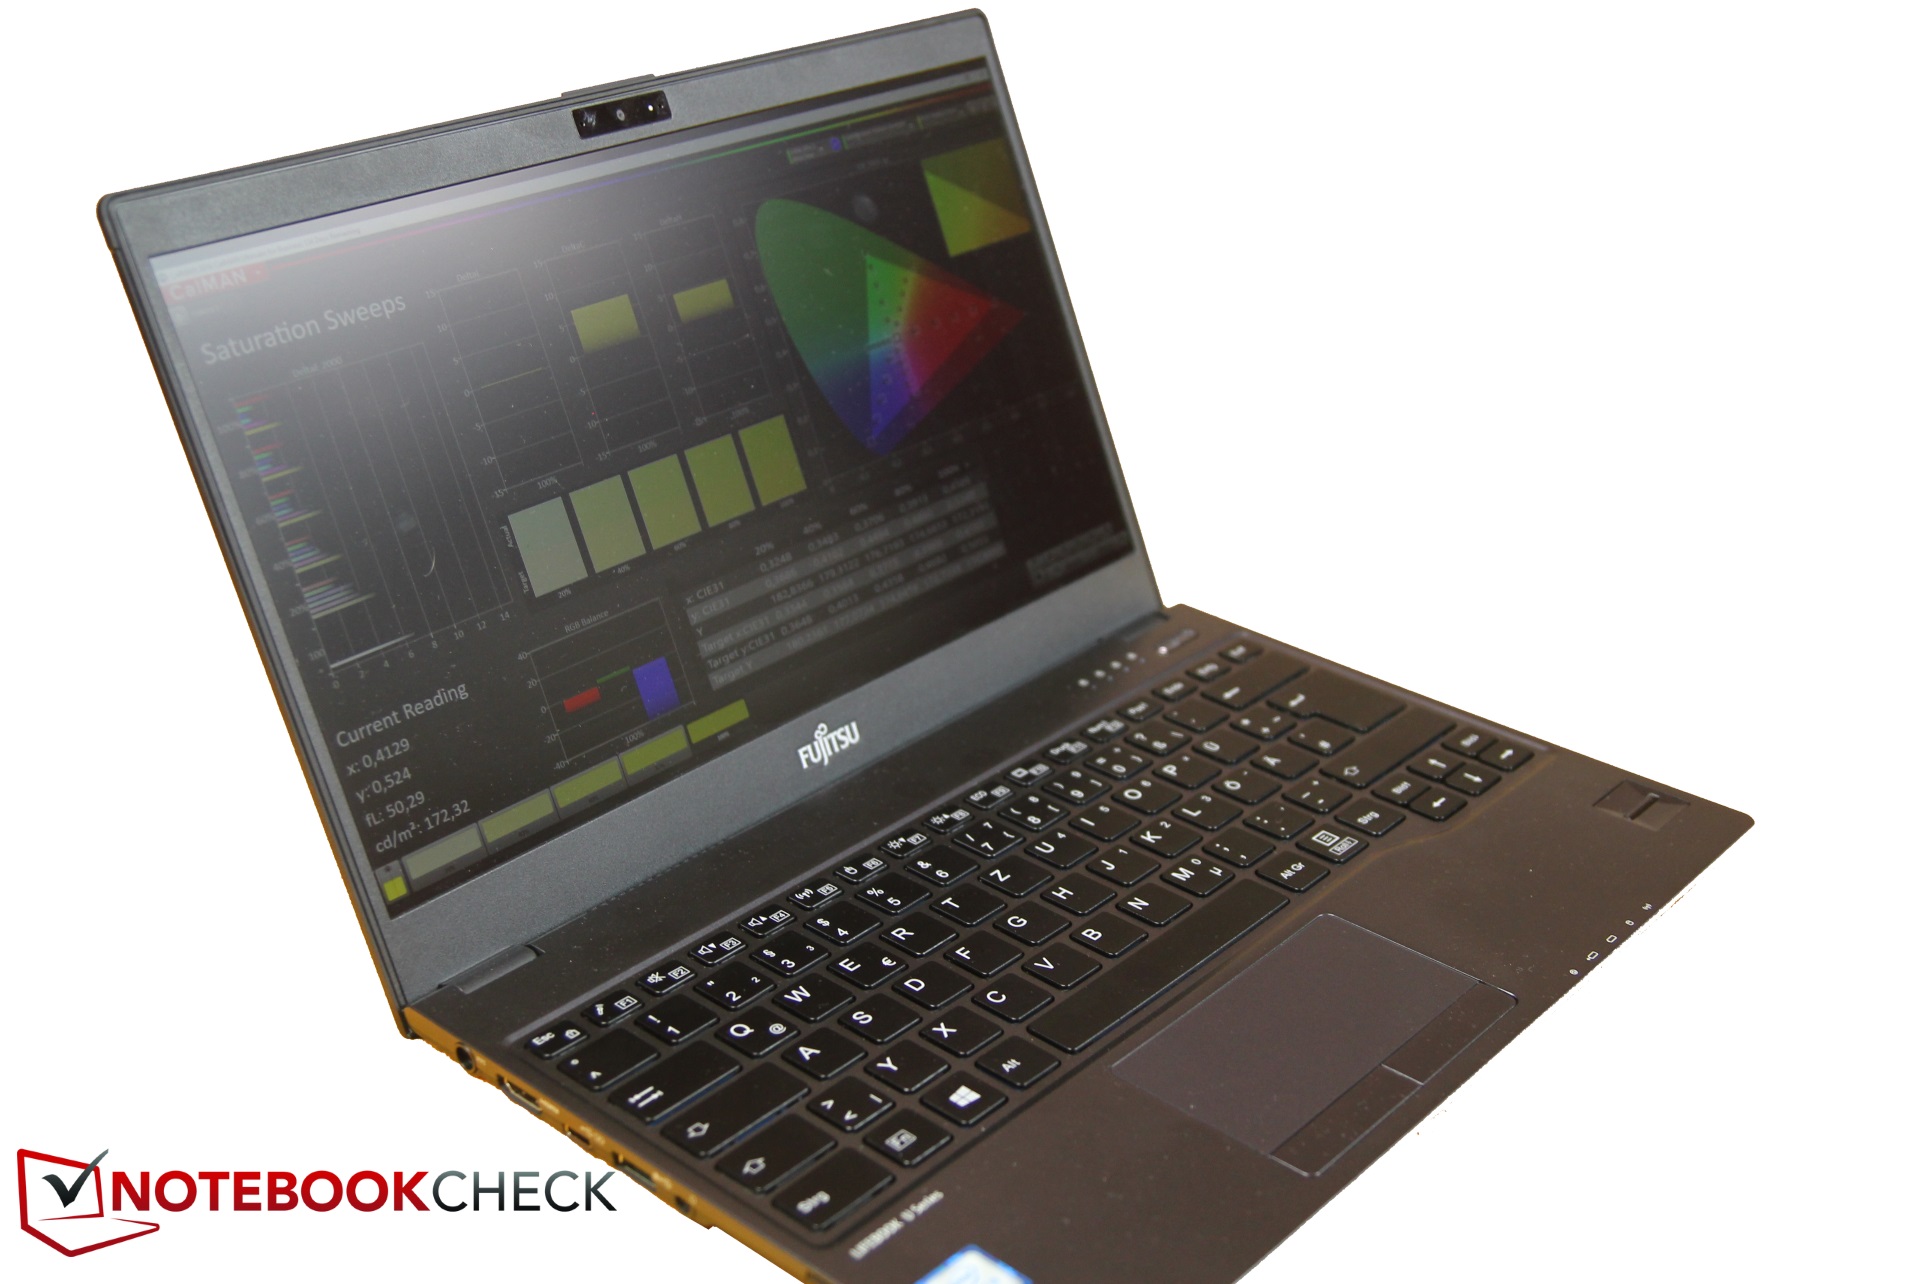 Fujitsu LifeBook U Core i5, Full HD Laptop Review